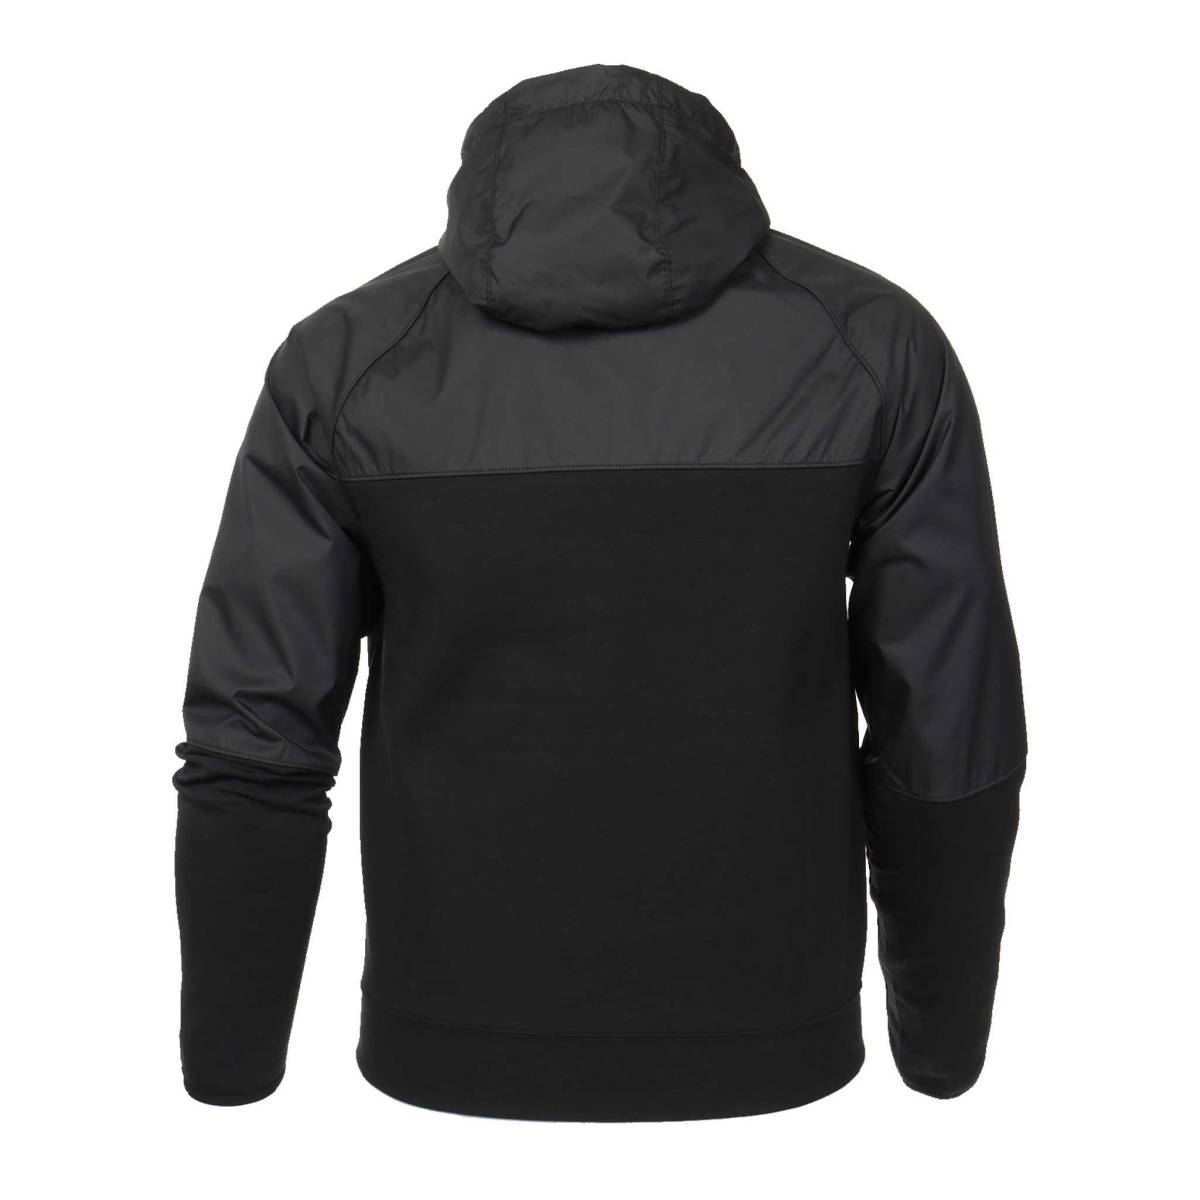 #NIKE NSW WINTER FLEECE FZ L/S HOODIE чёрный новый товар L размер Nike спорт одежда winter флис полный Zip f-ti-DD4897-010